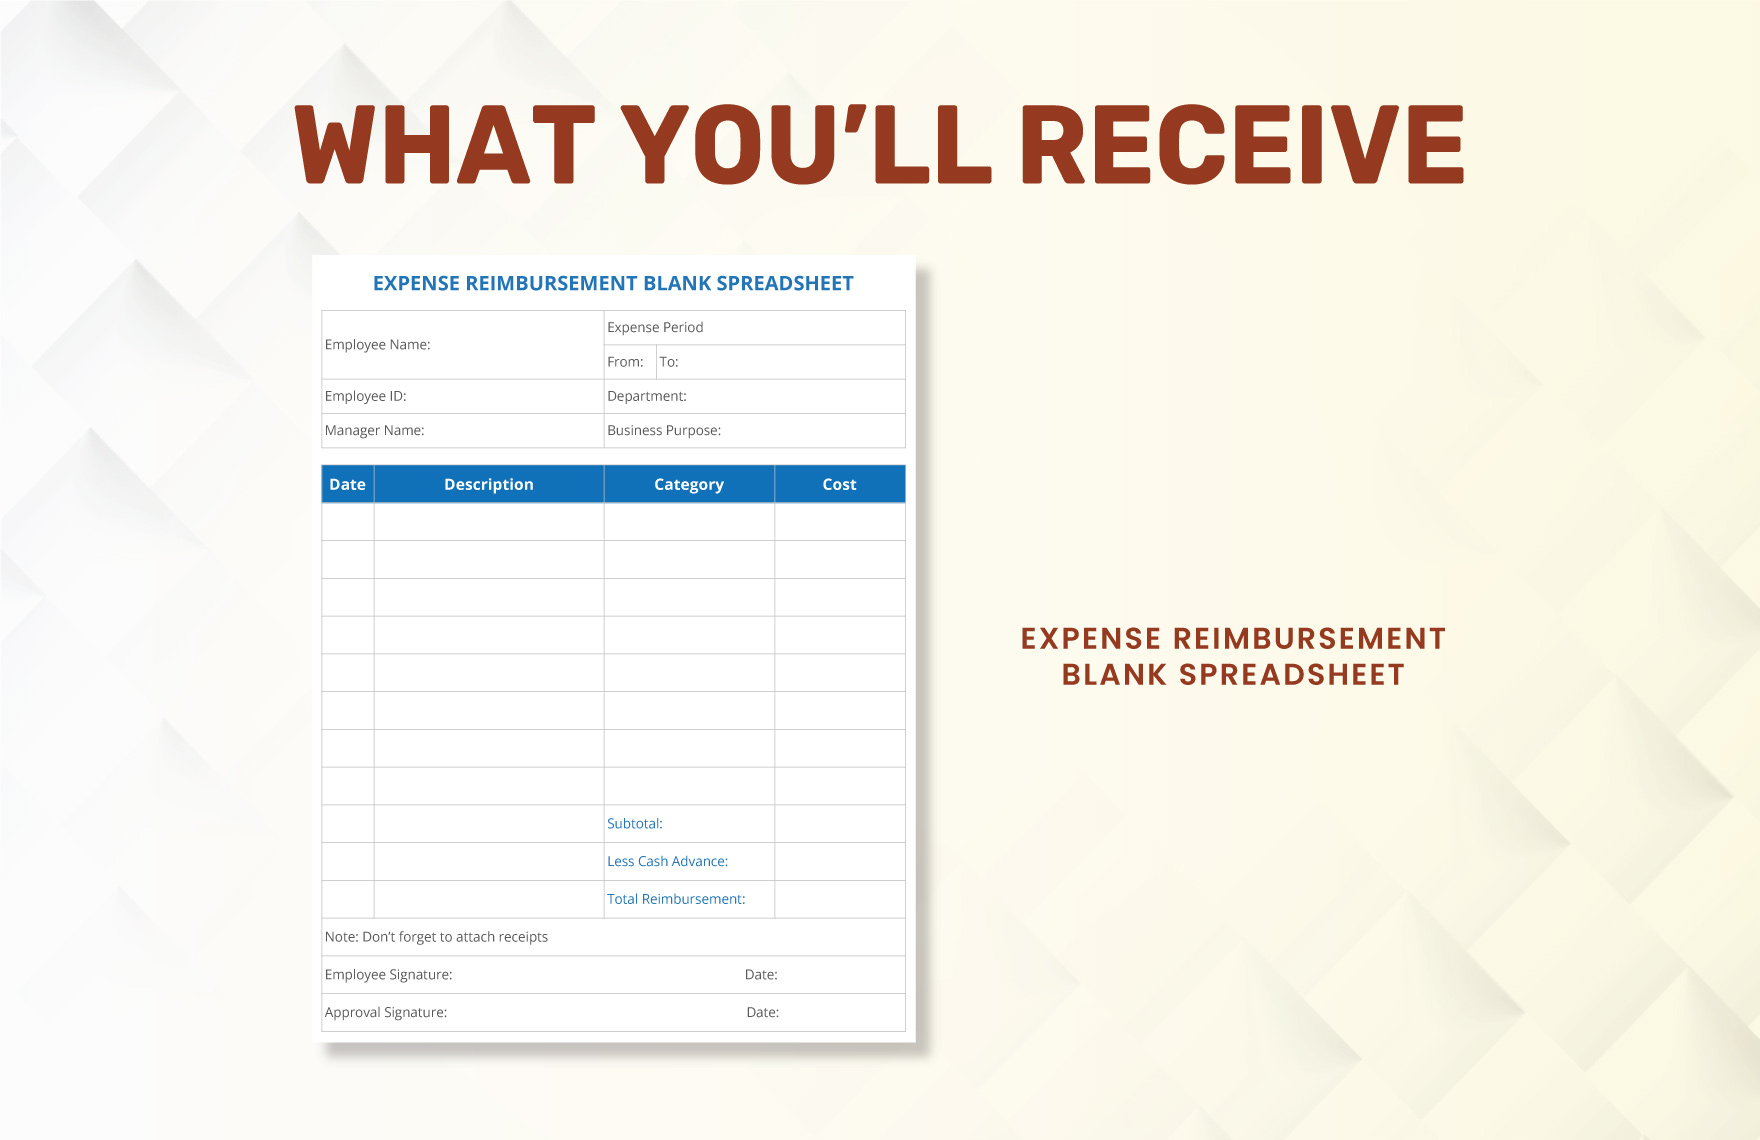 Expense Reimbursement Blank Spreadsheet Template